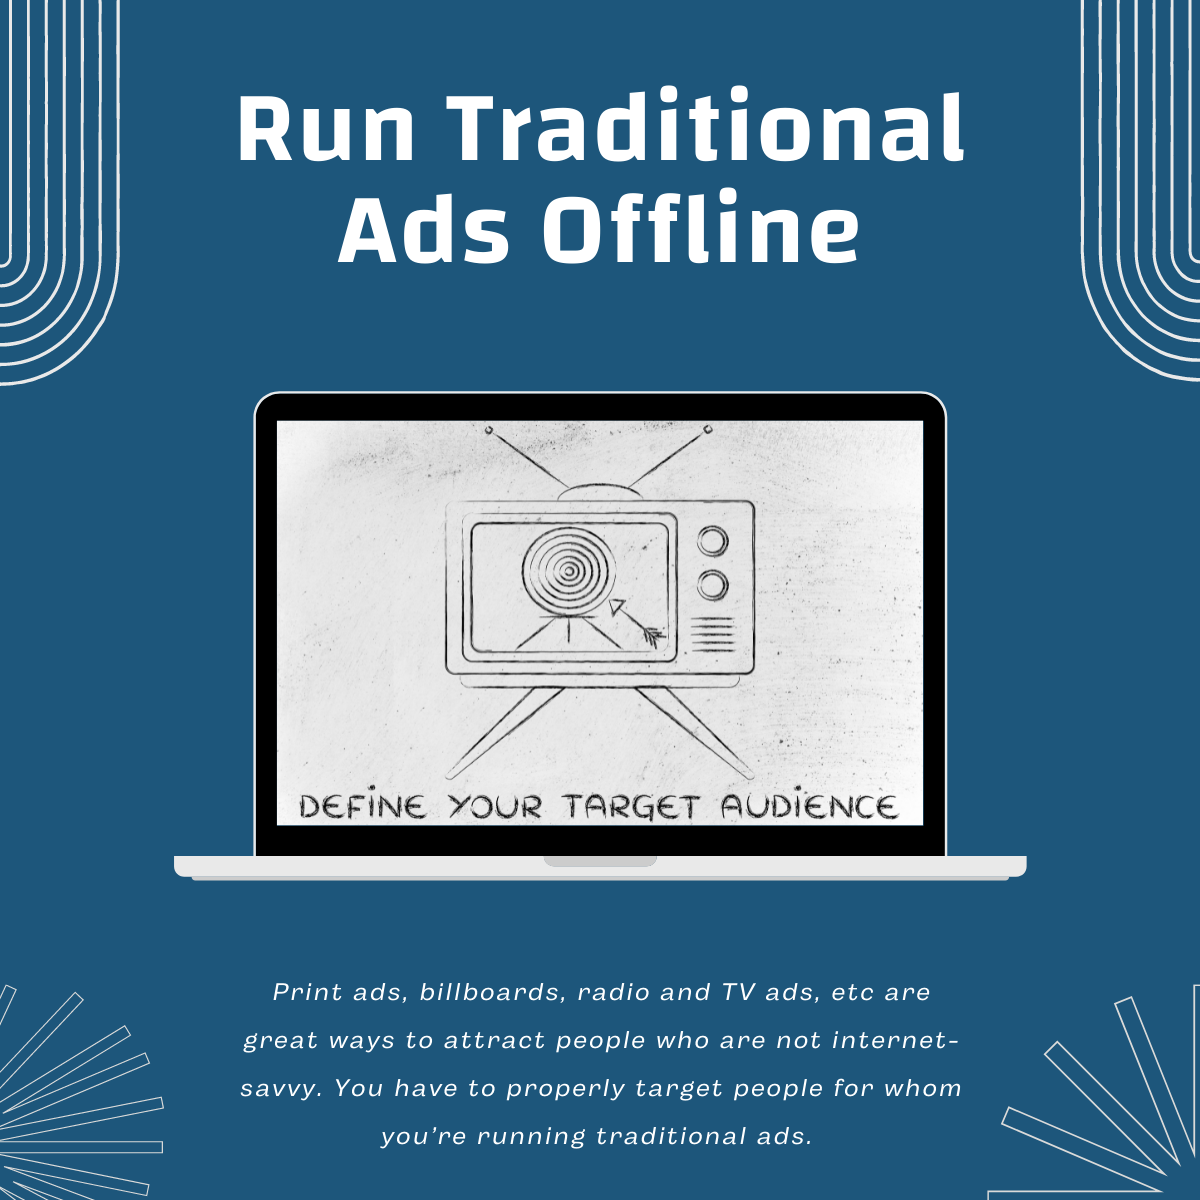 Run Traditional Ads Offline